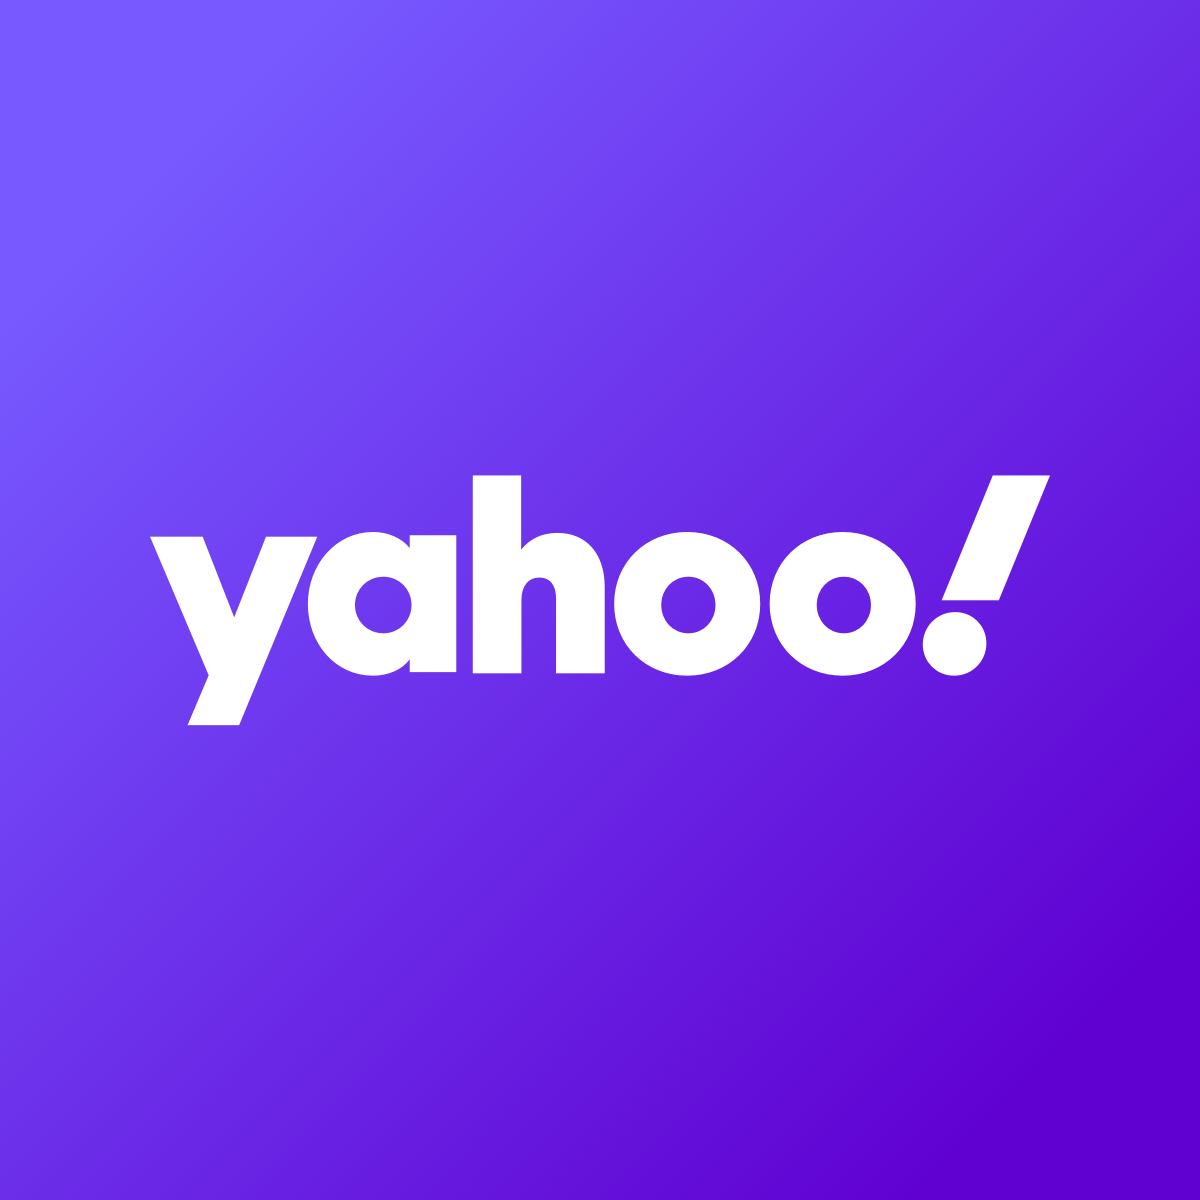 Preston to consider ‘temporary and limited’ moratorium on cannabis establishments – Yahoo News